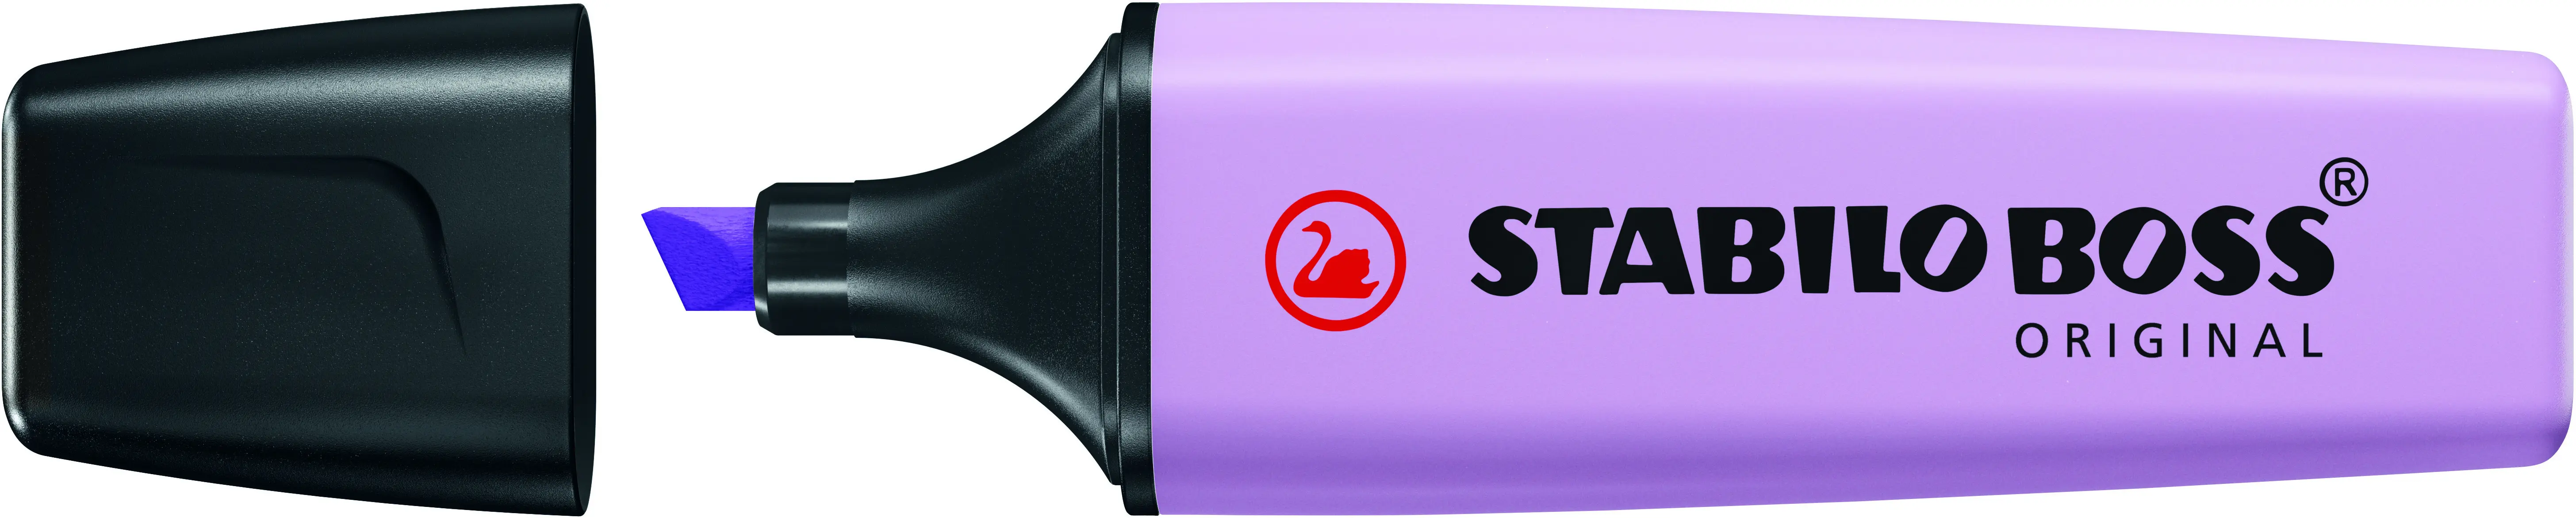 Stabilo Boss 70 Pastel Rotulador Marcador Fluorescente - Trazo entre 2 y 5mm - Recargable - Tinta co